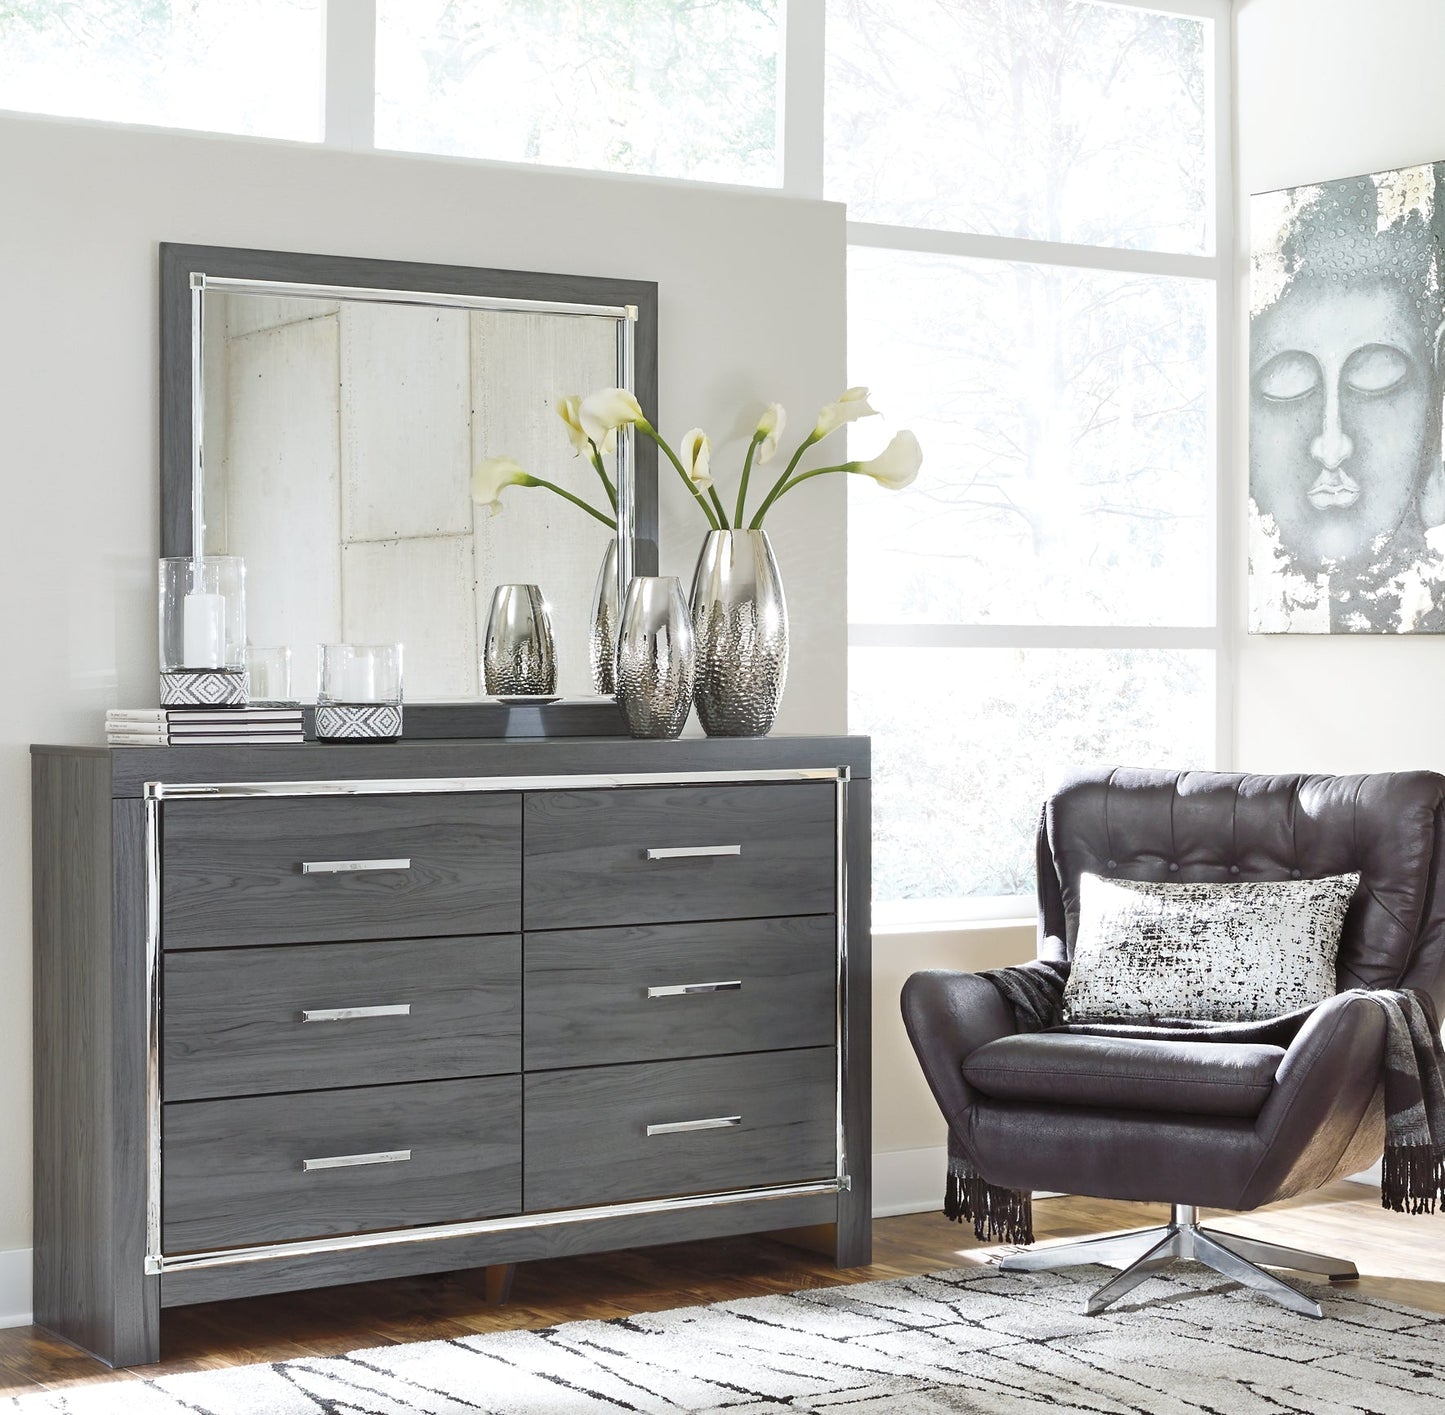 Lodanna Dresser and Mirror at Cloud 9 Mattress & Furniture furniture, home furnishing, home decor